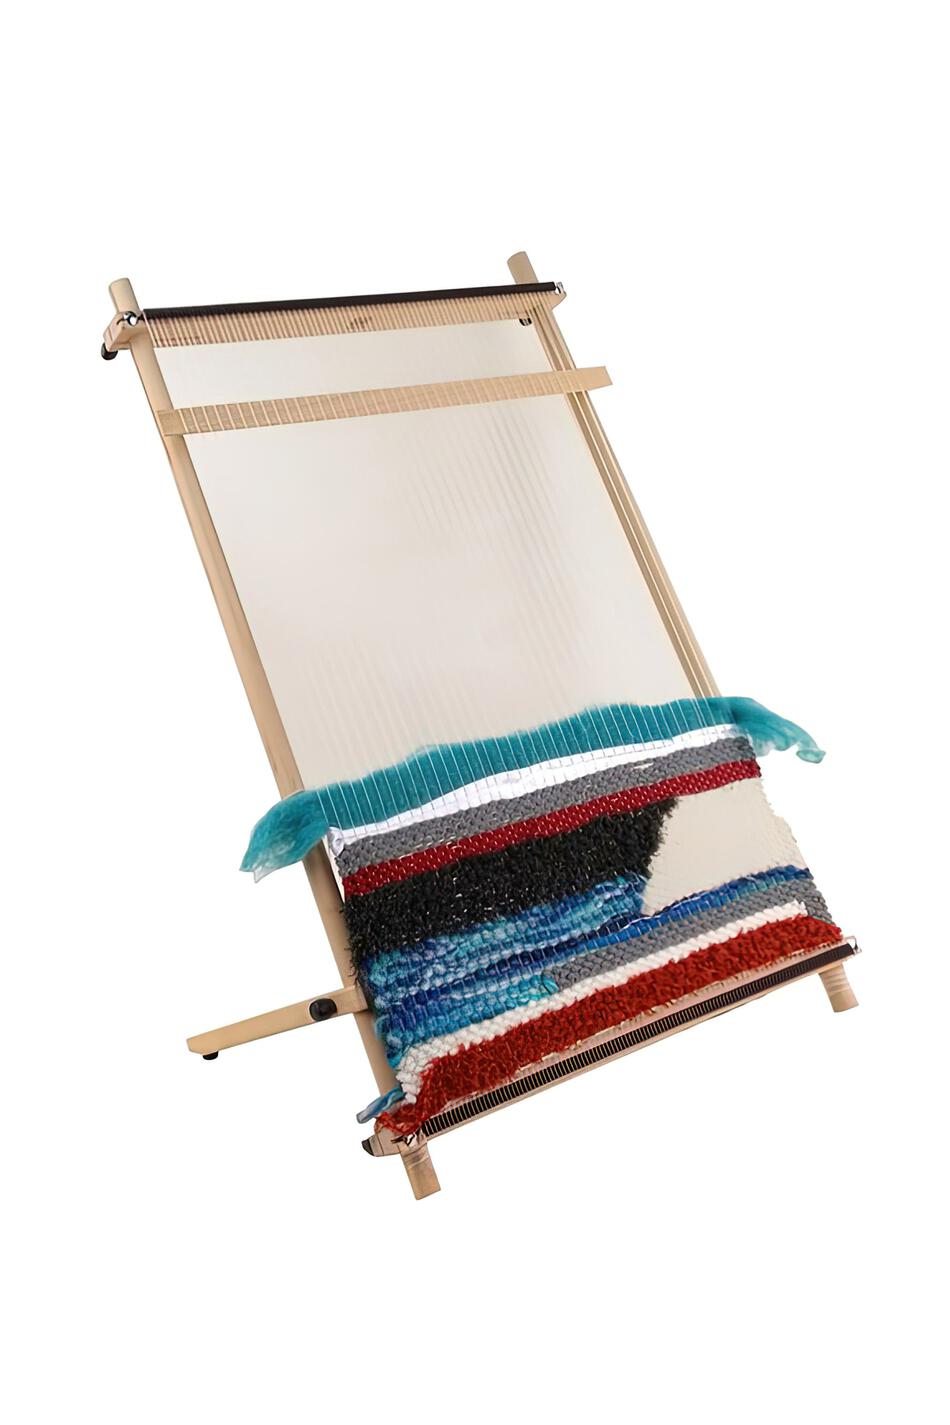 Weaving Equipment Louet Lisa 60x90 cm 236quot x 354quot Tapestry Loom XL